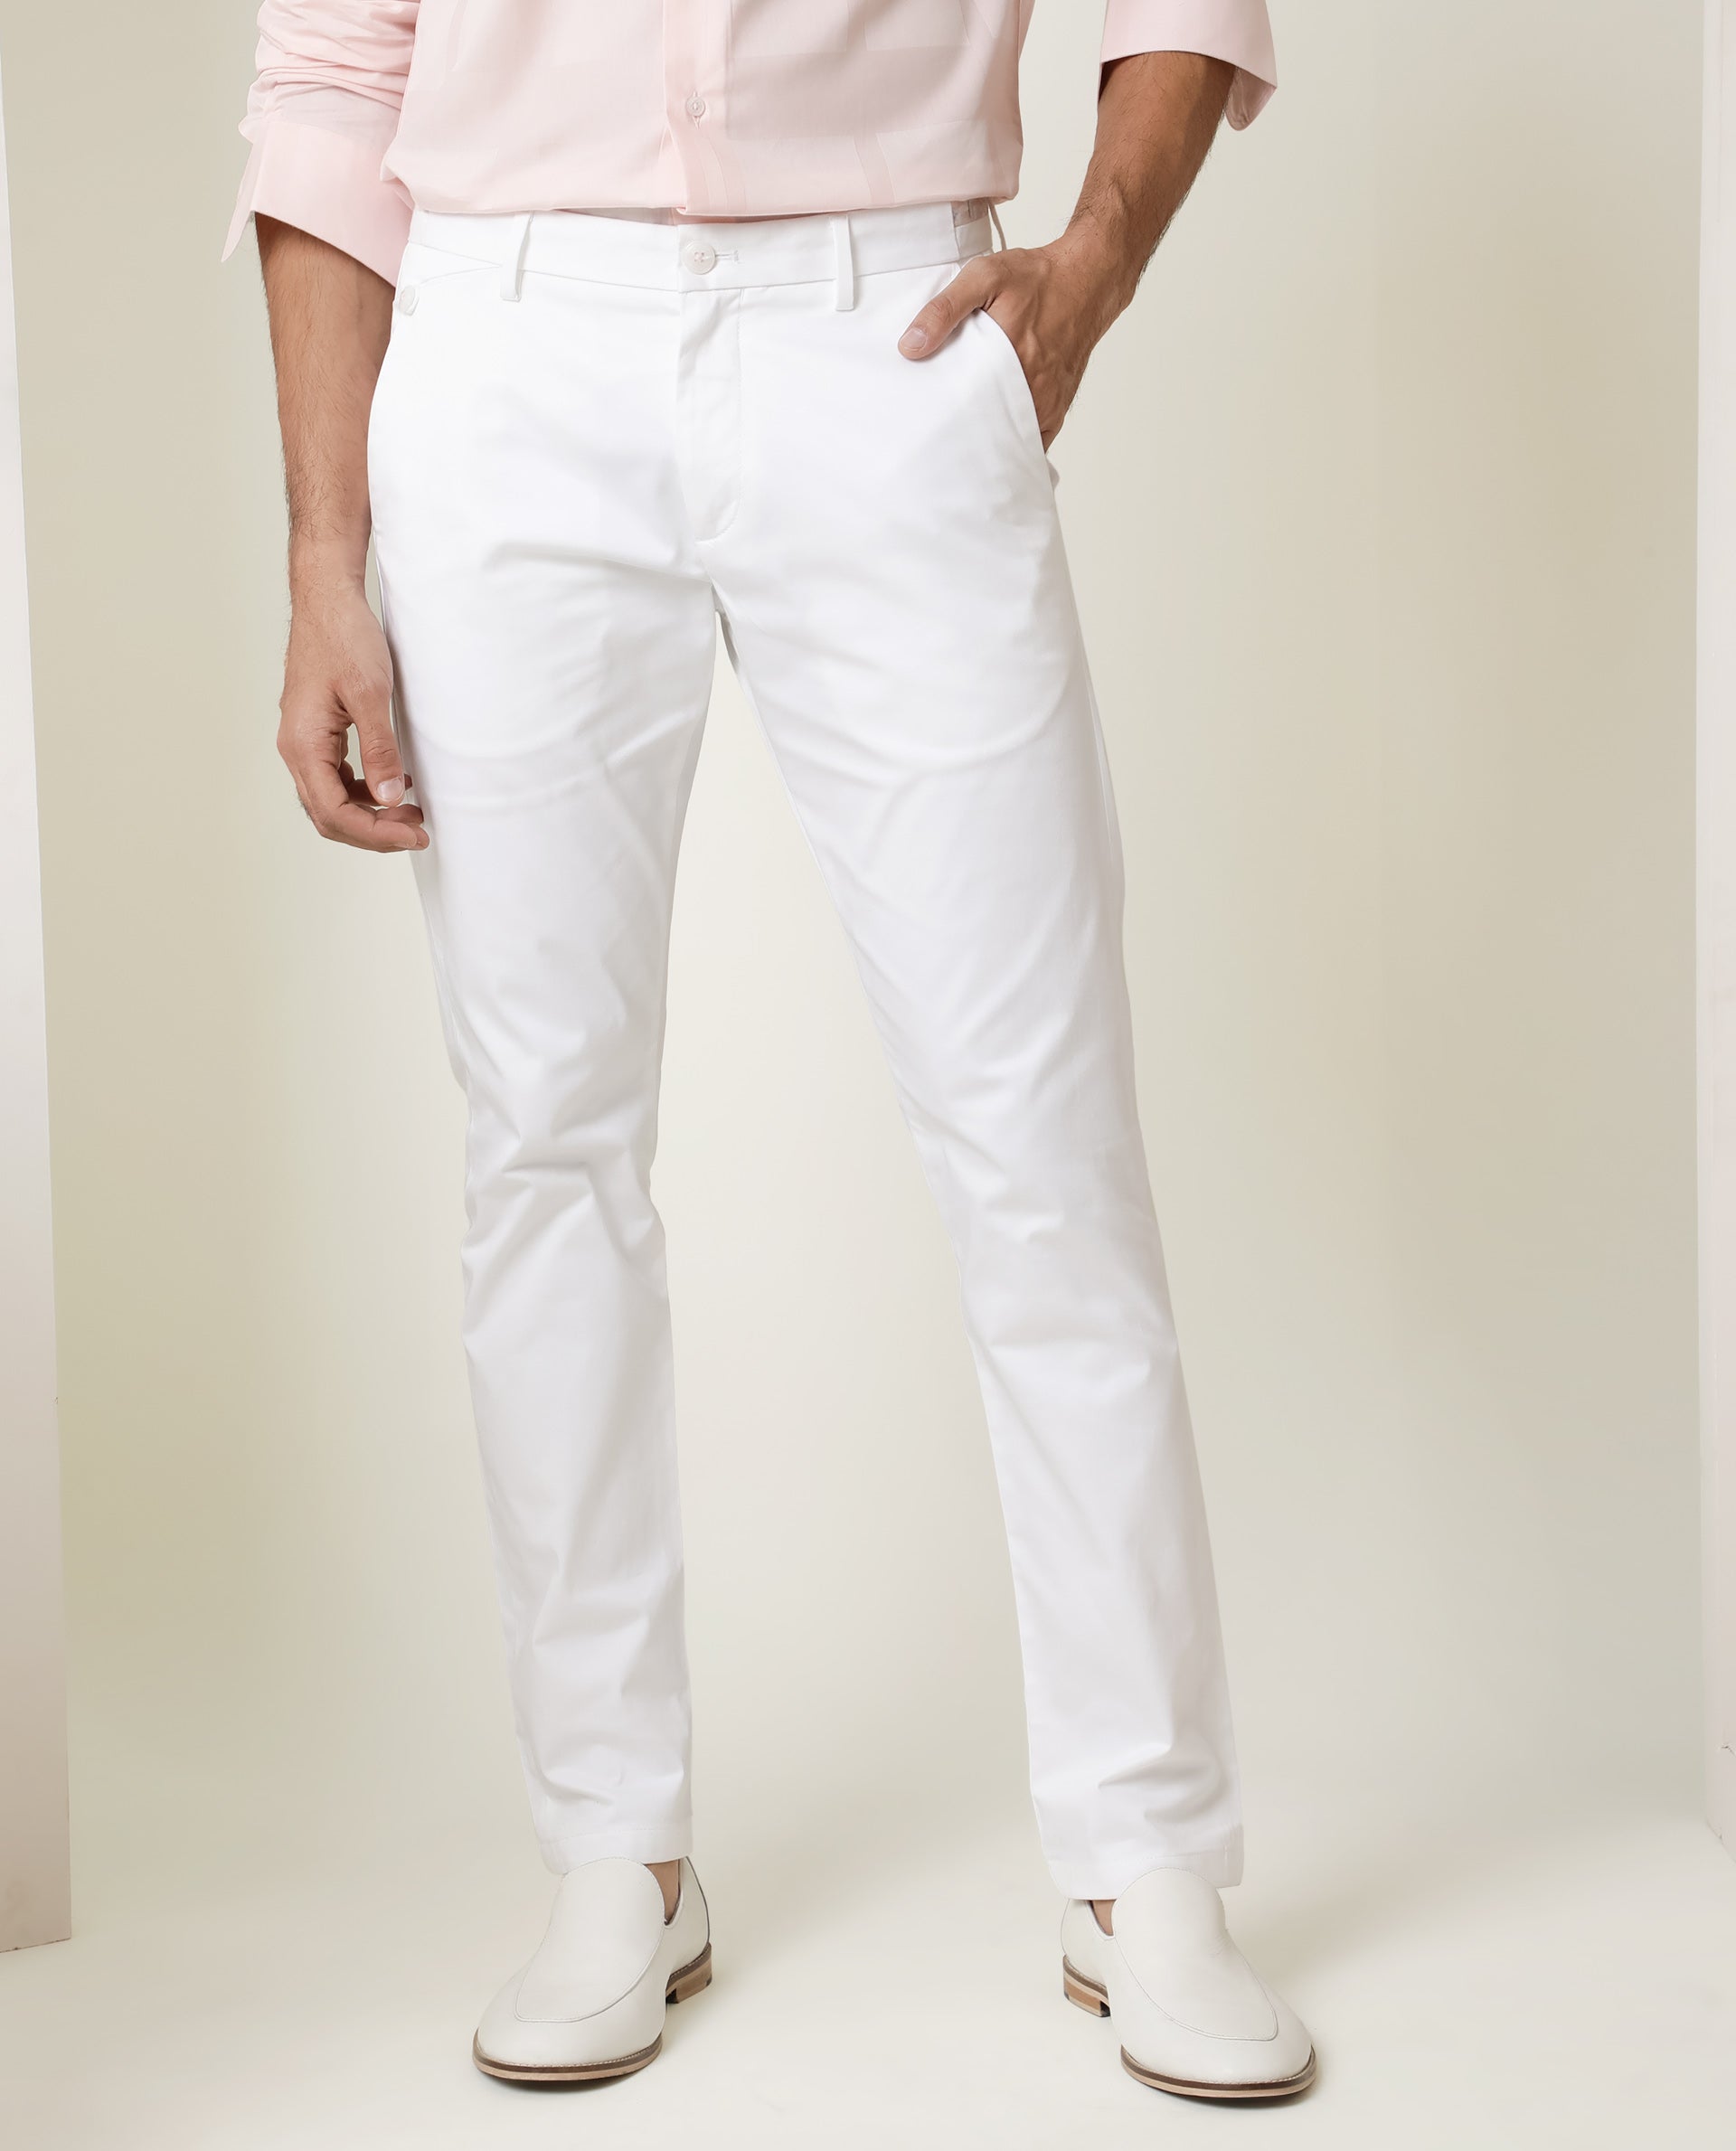 Buy Men Blue Slim Fit Textured Casual Trousers Online  709576  Allen Solly